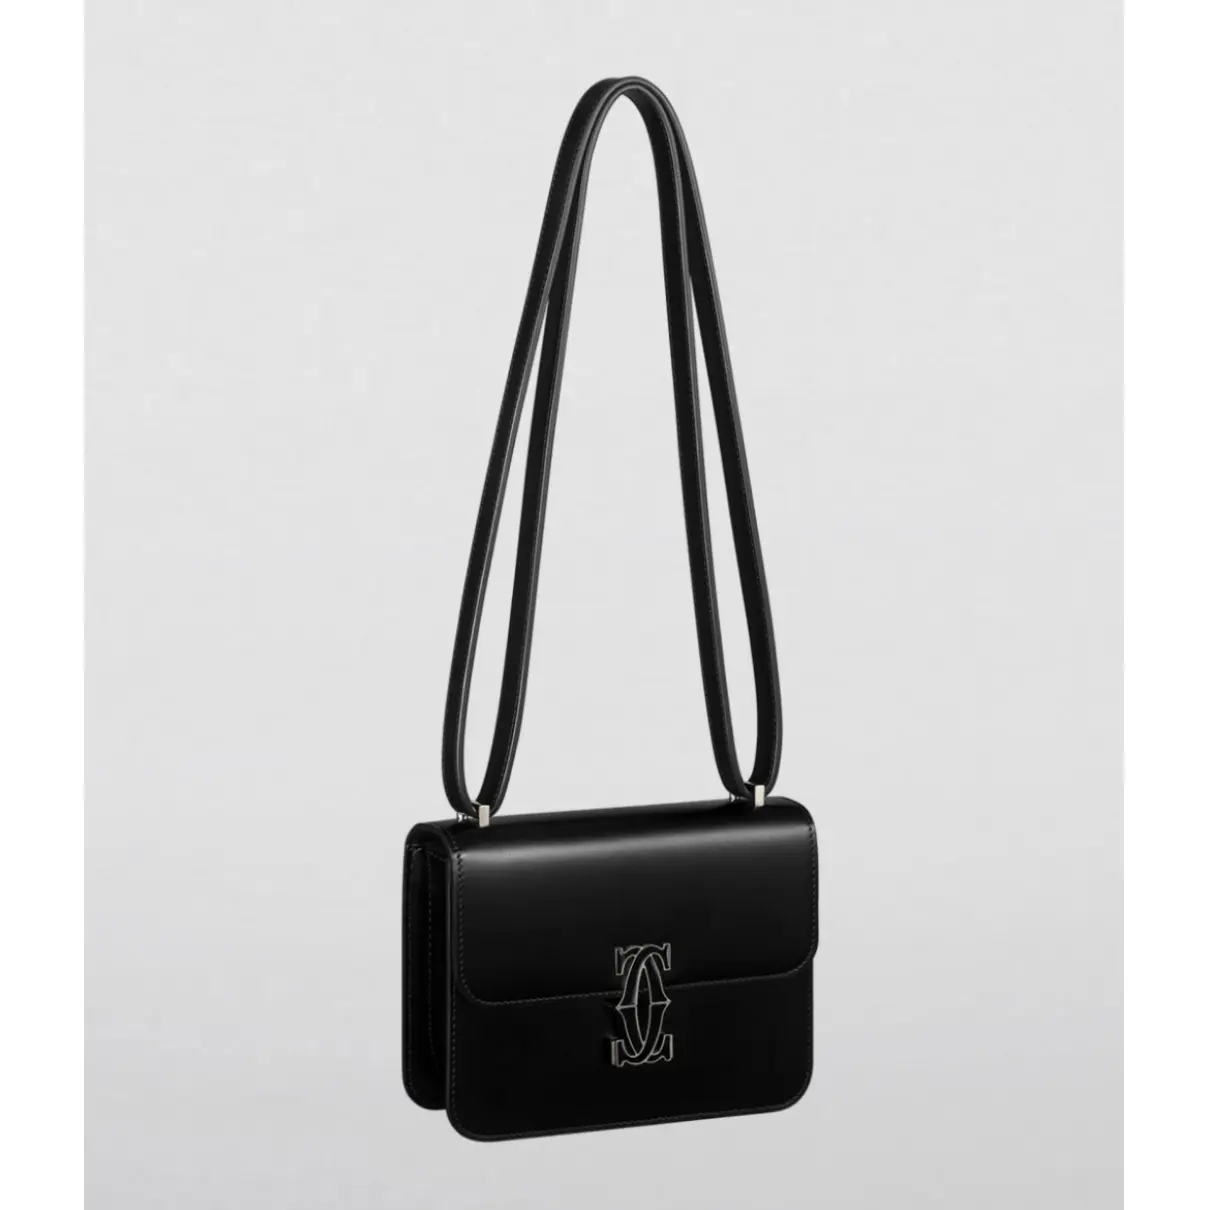 Buy Cartier C leather mini bag online